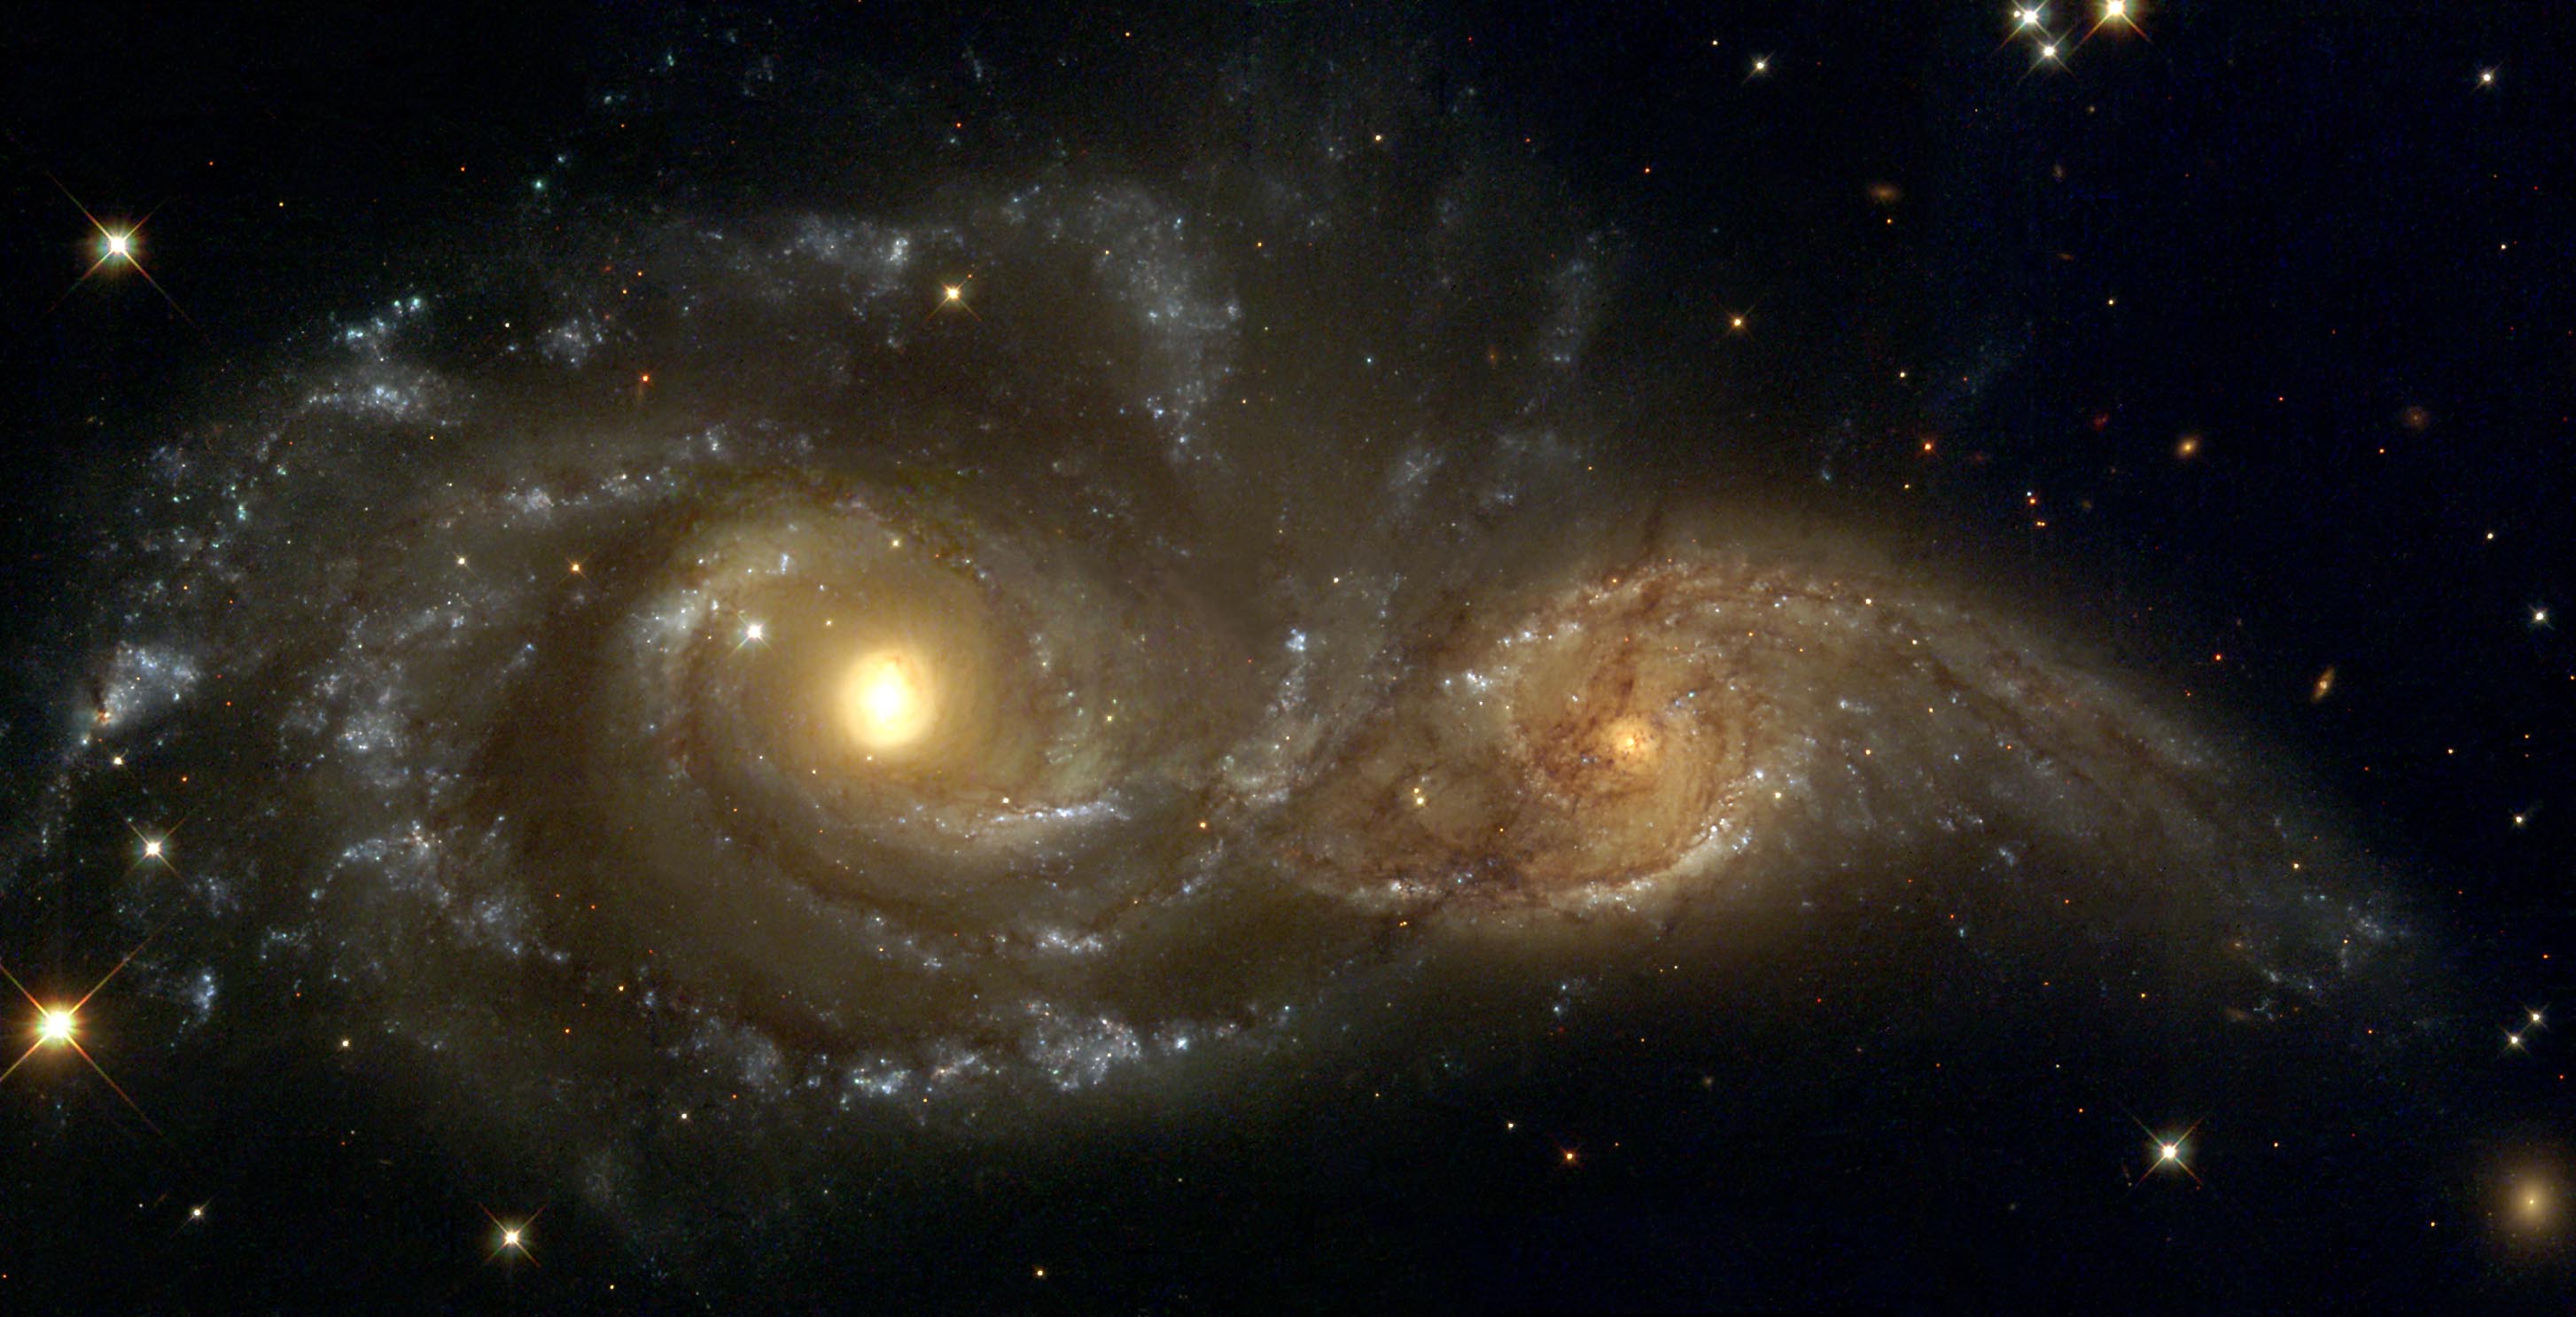 APOD: 2014 January 19 - Spiral Galaxies in Collision